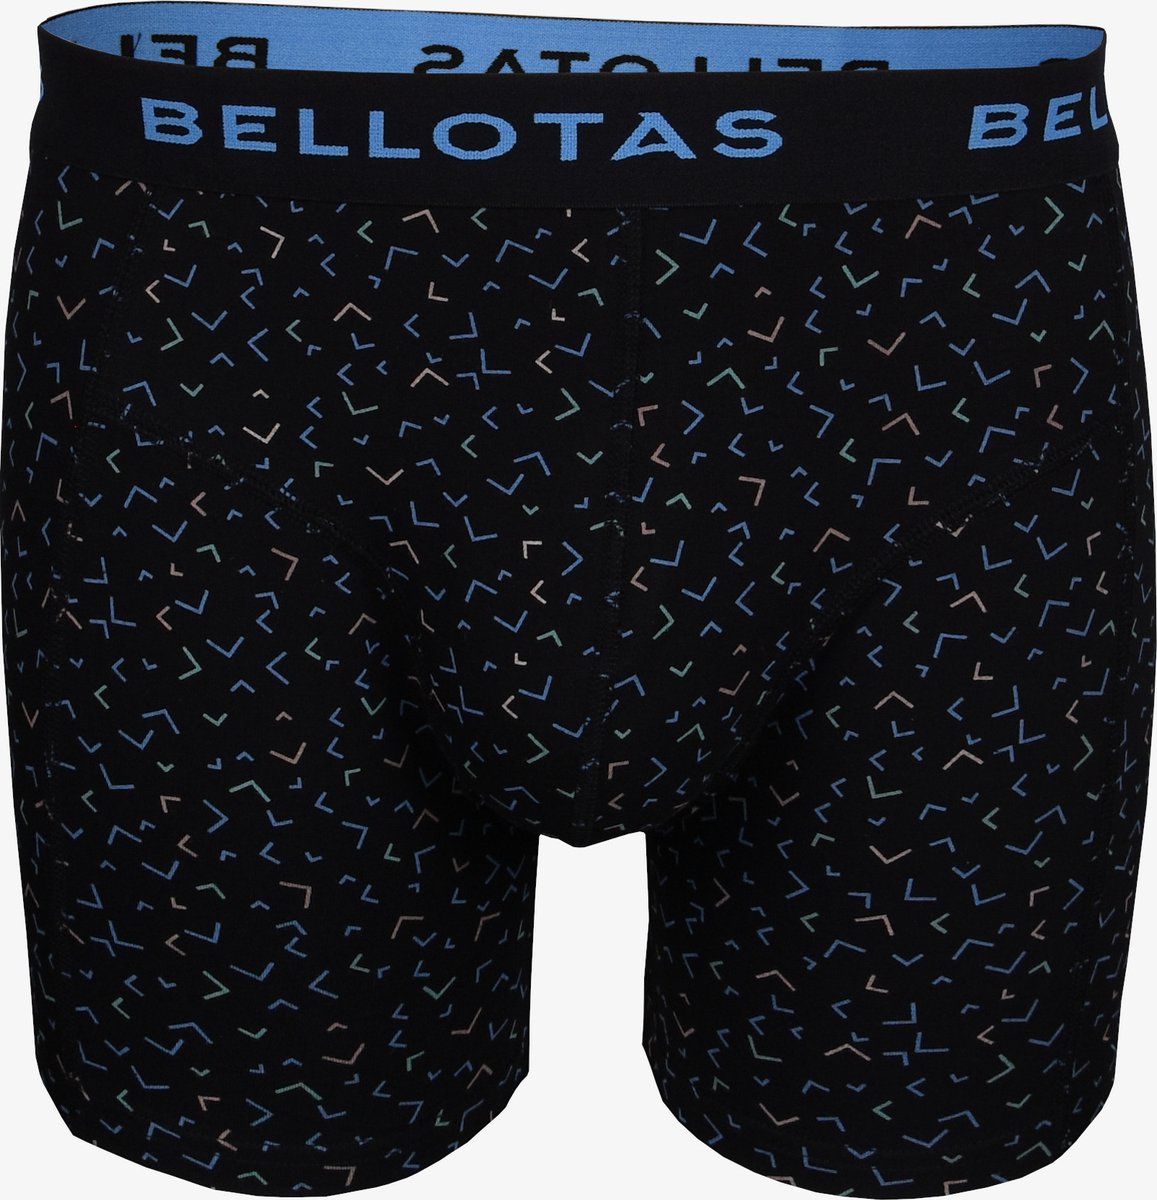 Bellotas - Boxershort - Gilles L